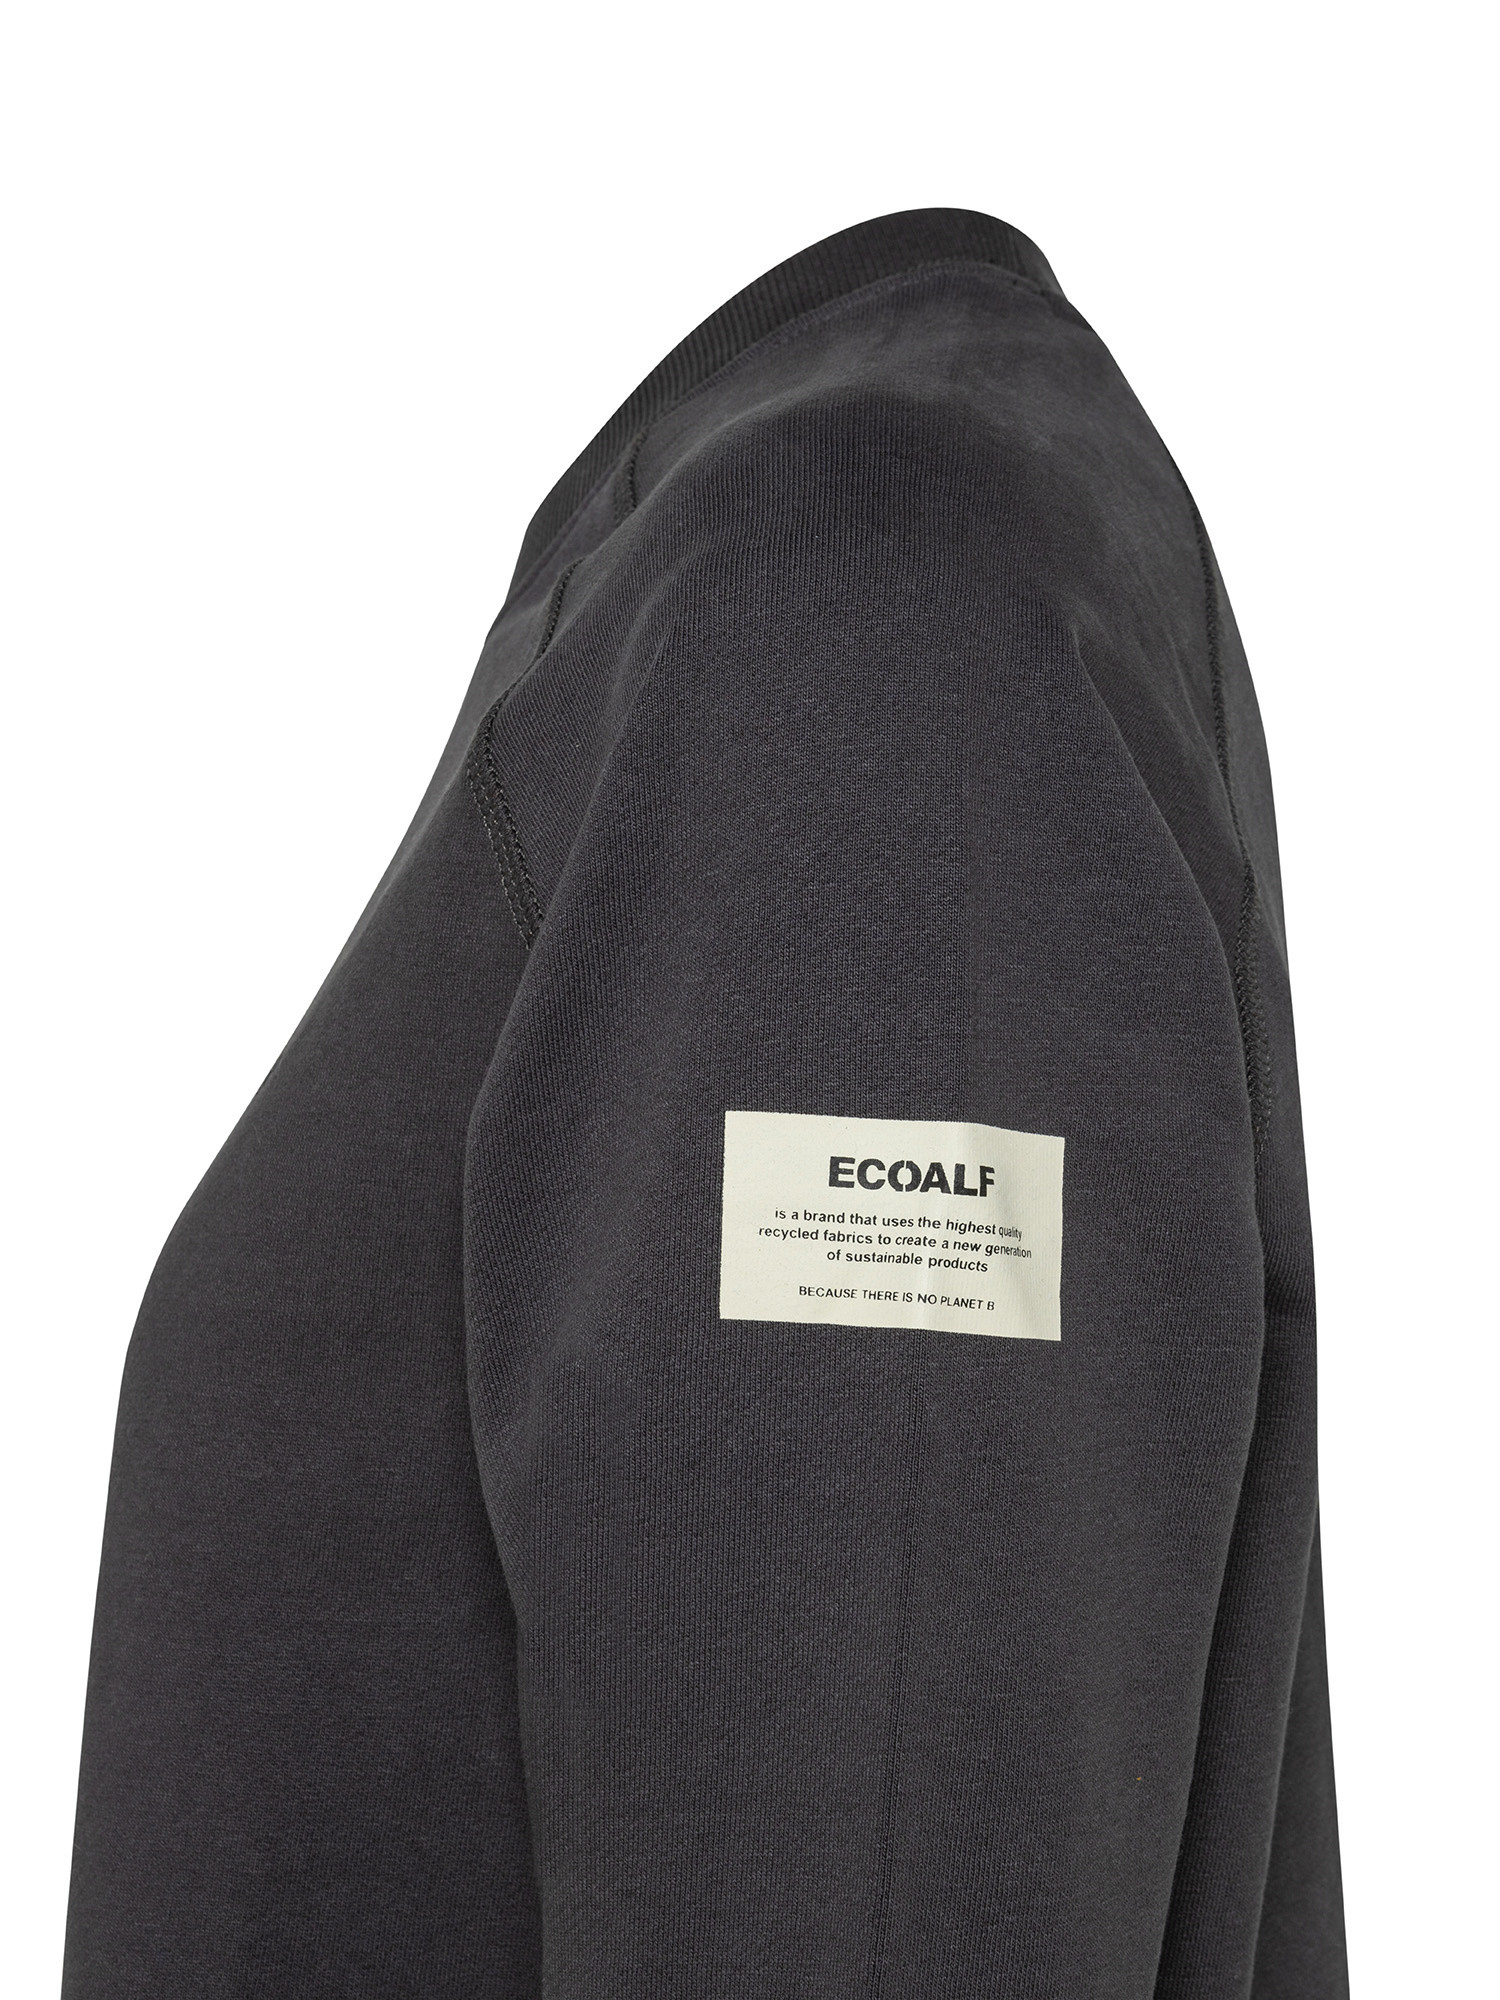 Ecoalf - Sirah sweatshirt with print, Anthracite, large image number 2